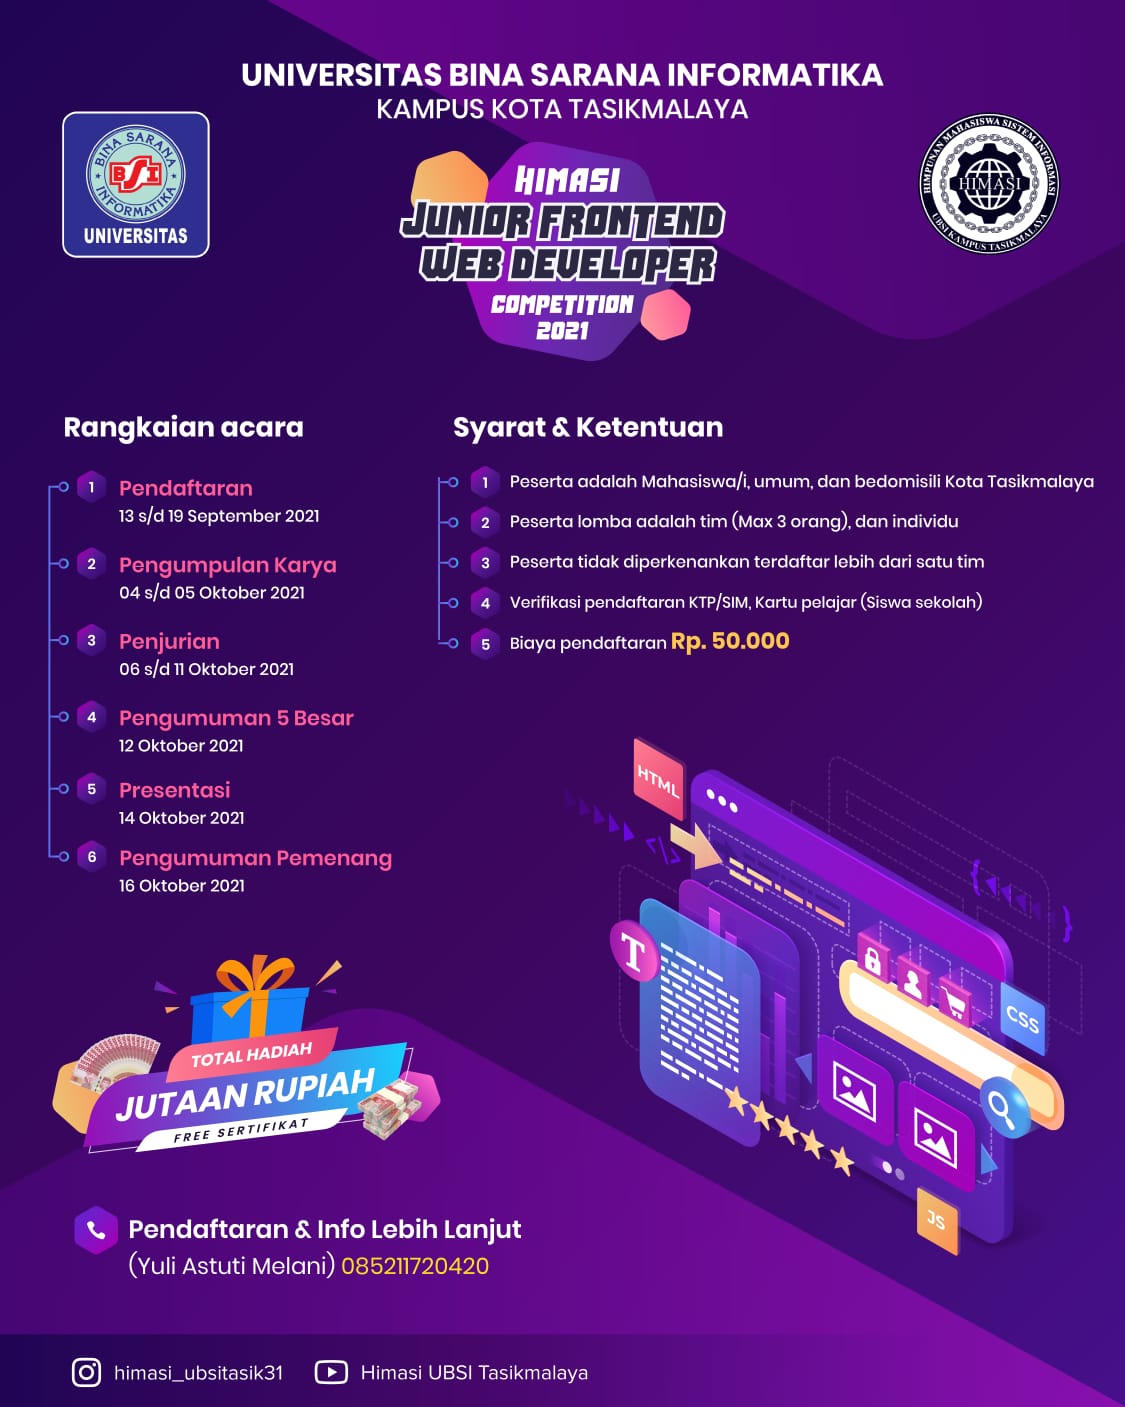 HIMASI Junior Front End Web Developer Competition 2021